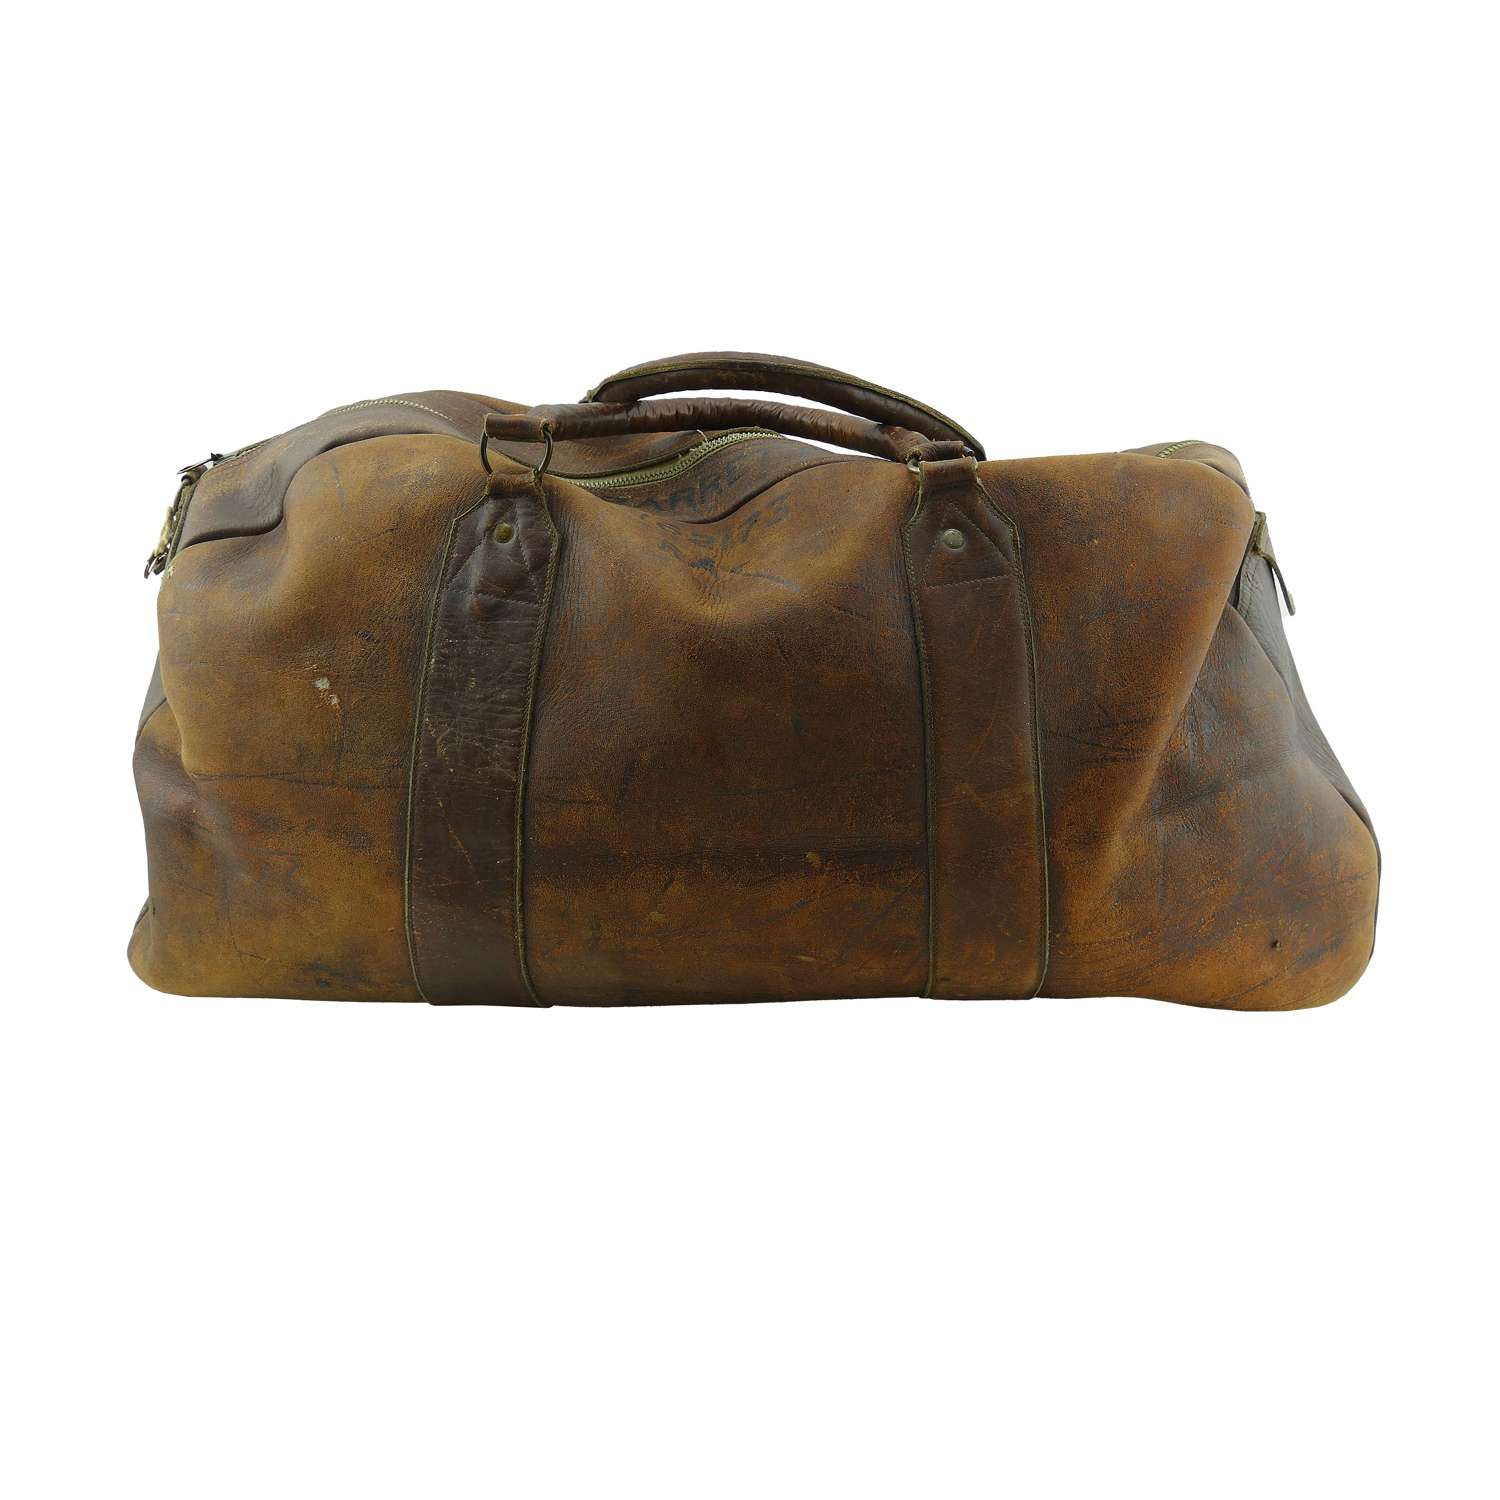 RAF airman's leather 'kit' bag, named